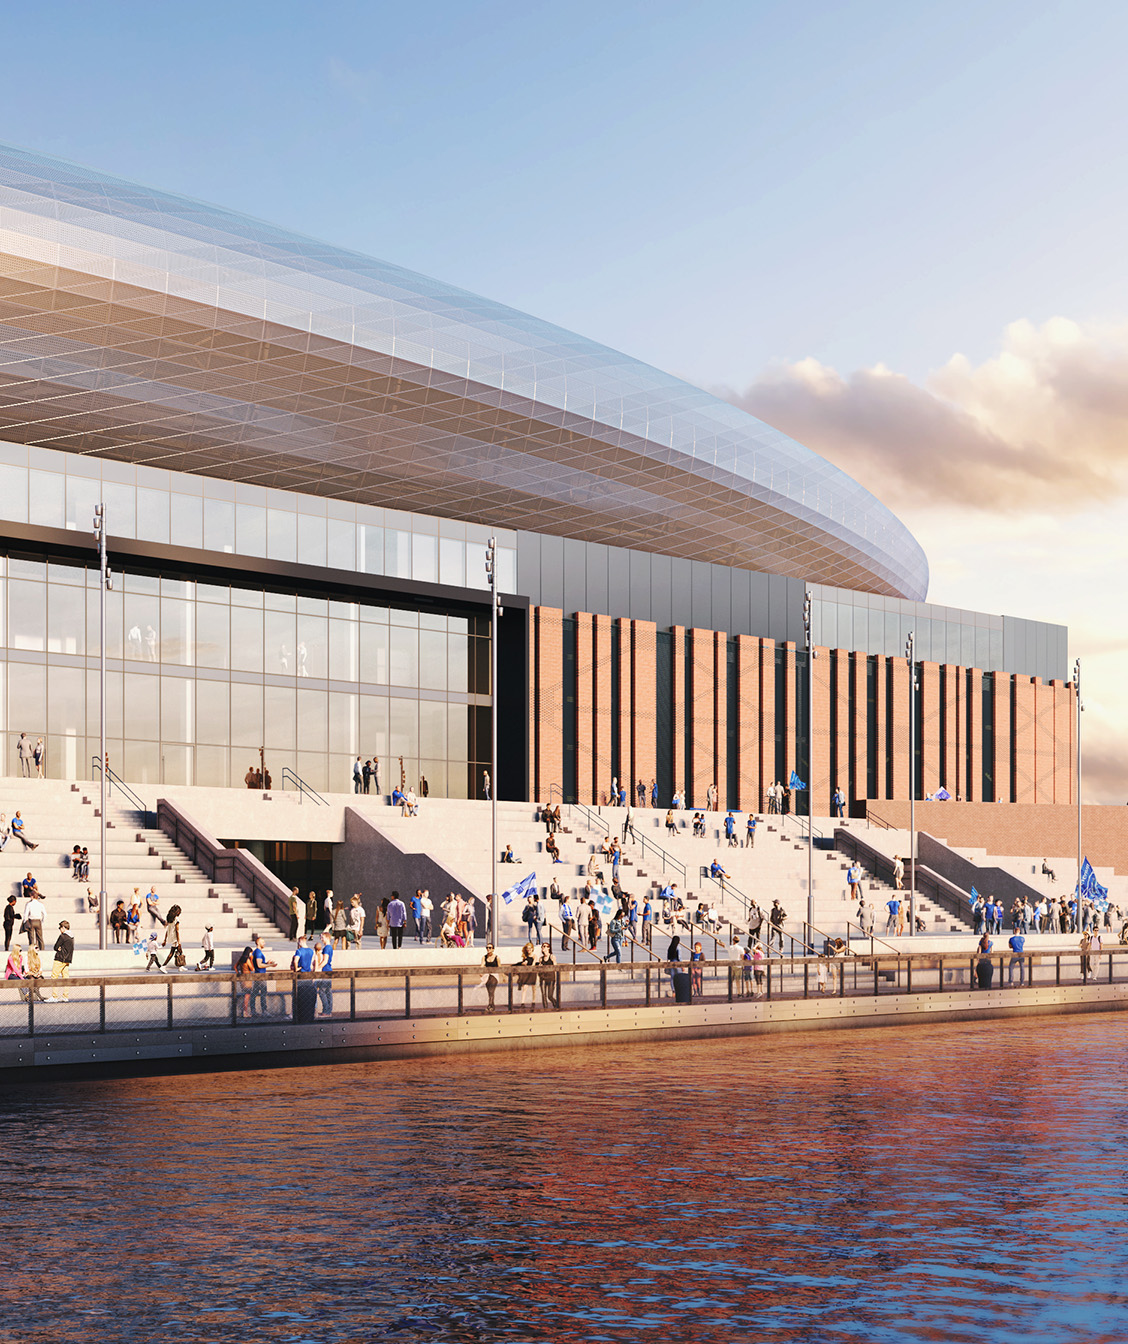 Generated image of the new Everton Stadium